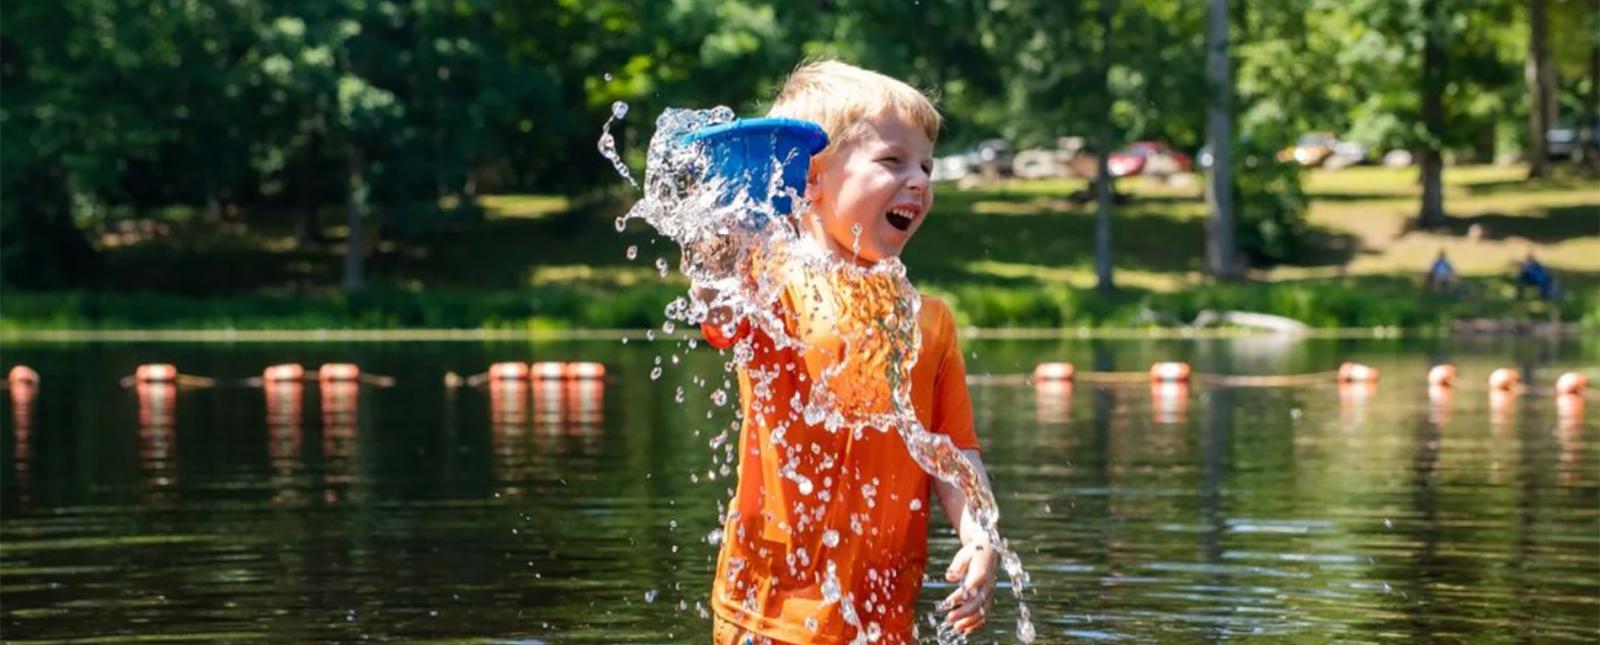 A boy splashing playfully in the water (Instagram@rachela.higgins)